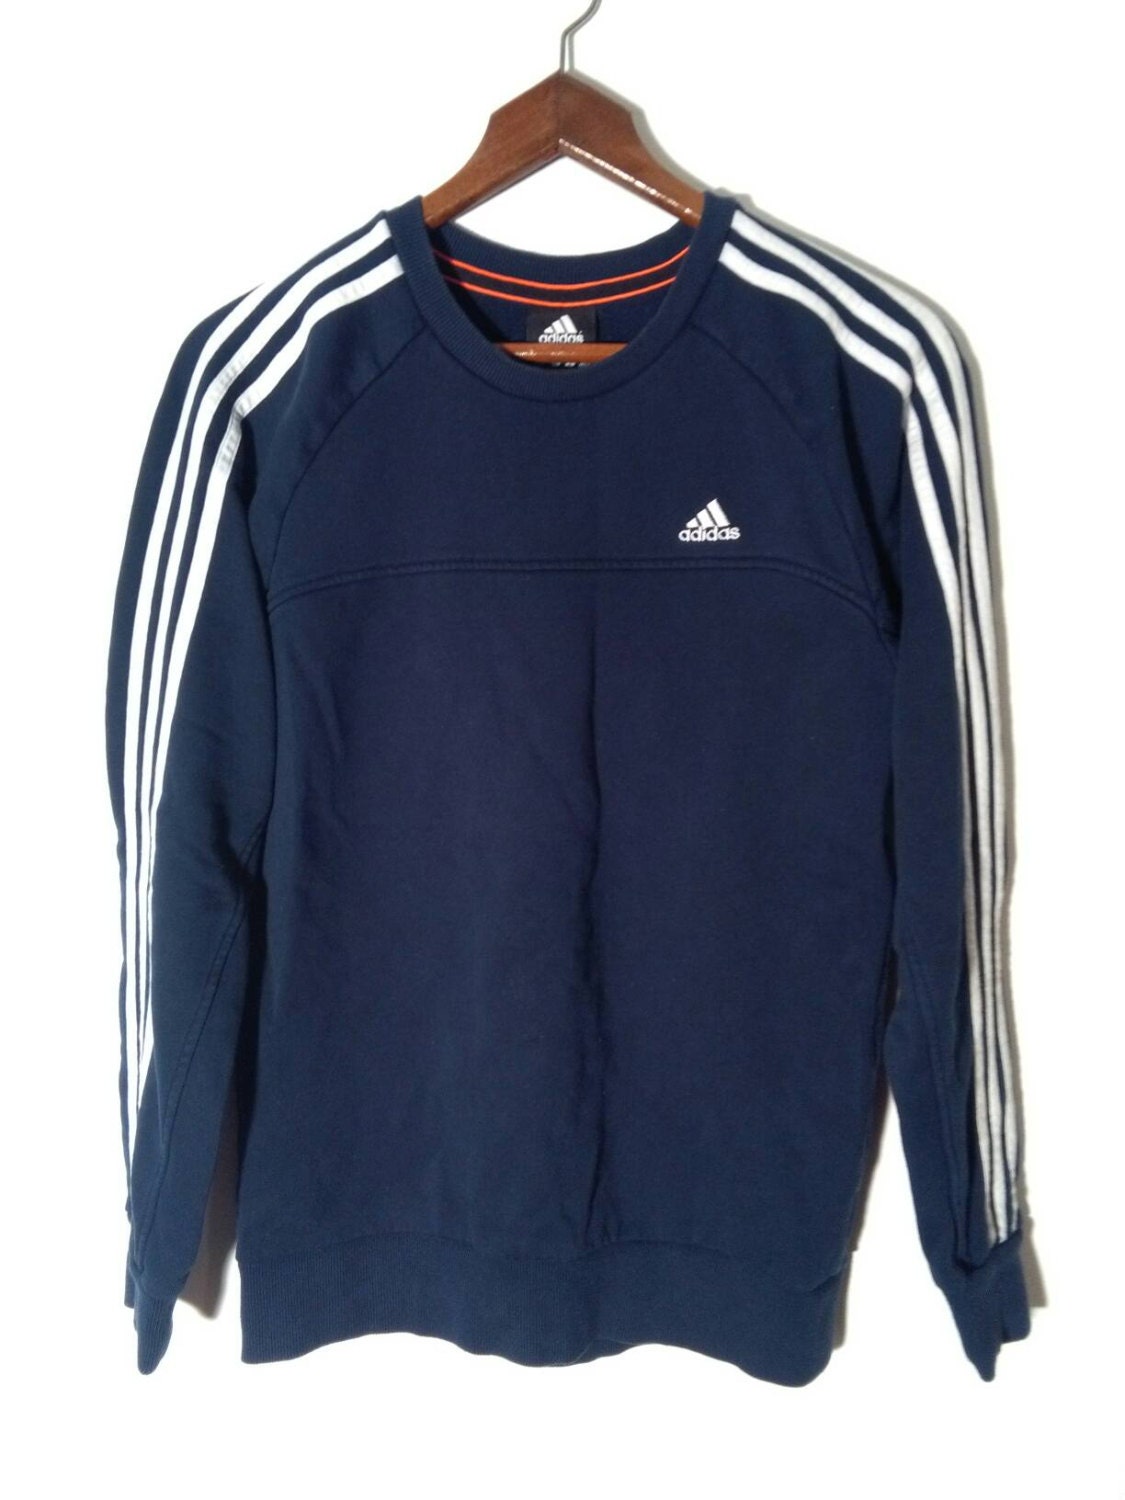 Vtg Adidas sweatshirt pullover / vintage by FoxVintageClothing